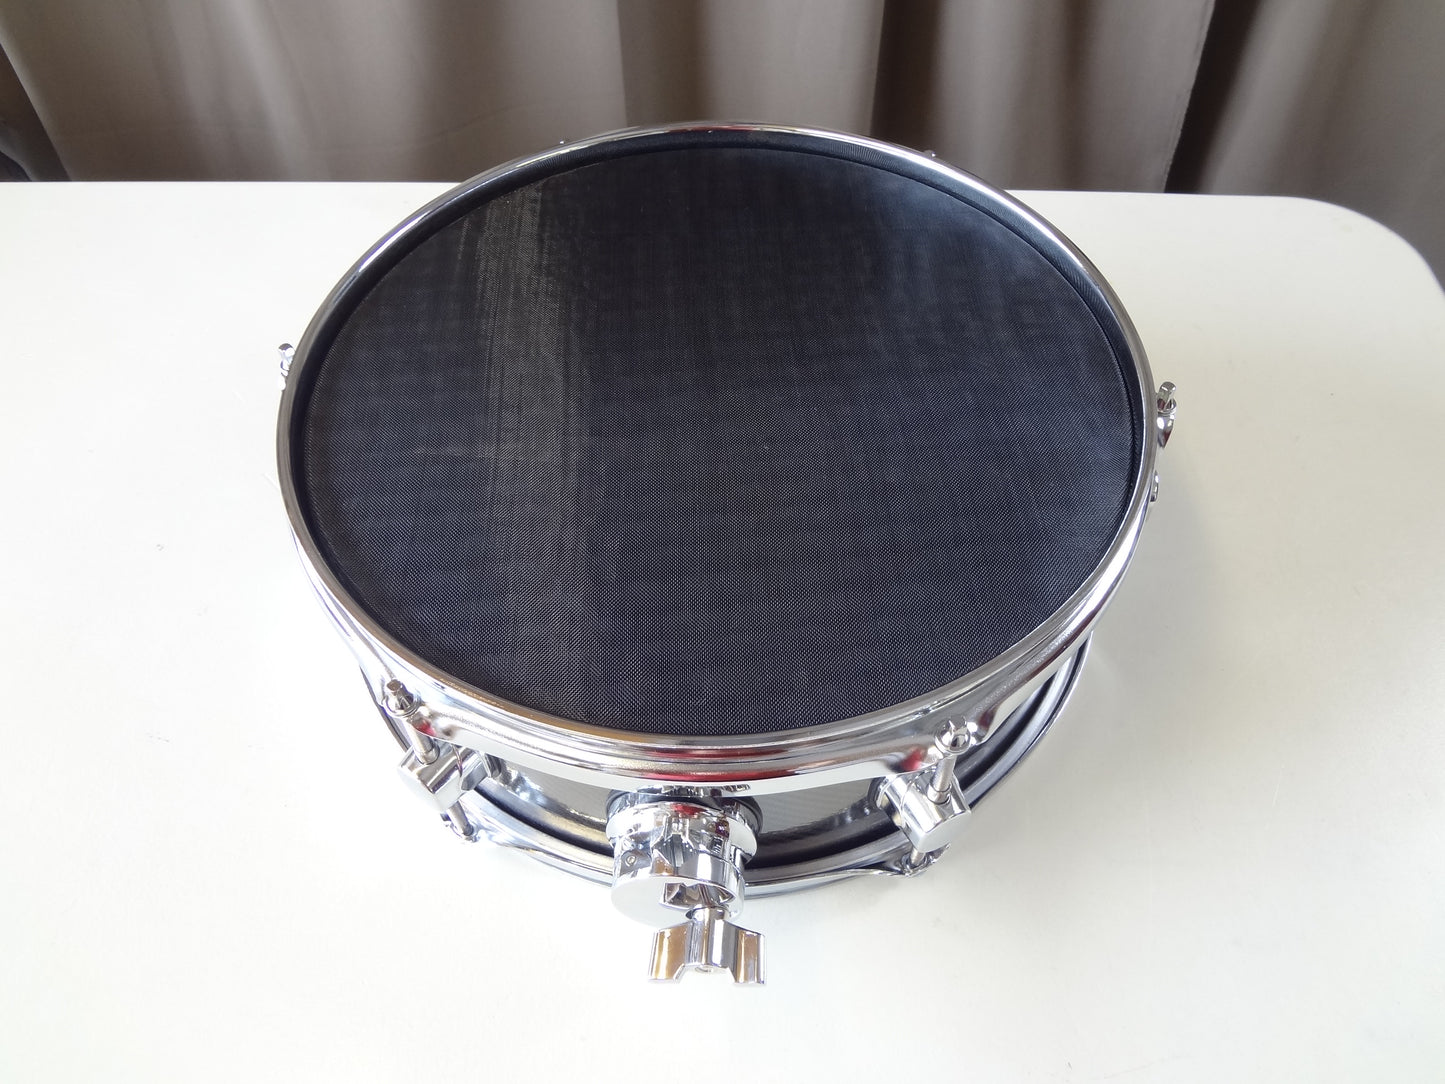 Refurbished 13 Inch Custom Built Electronic Snare Drum - Black Pattern